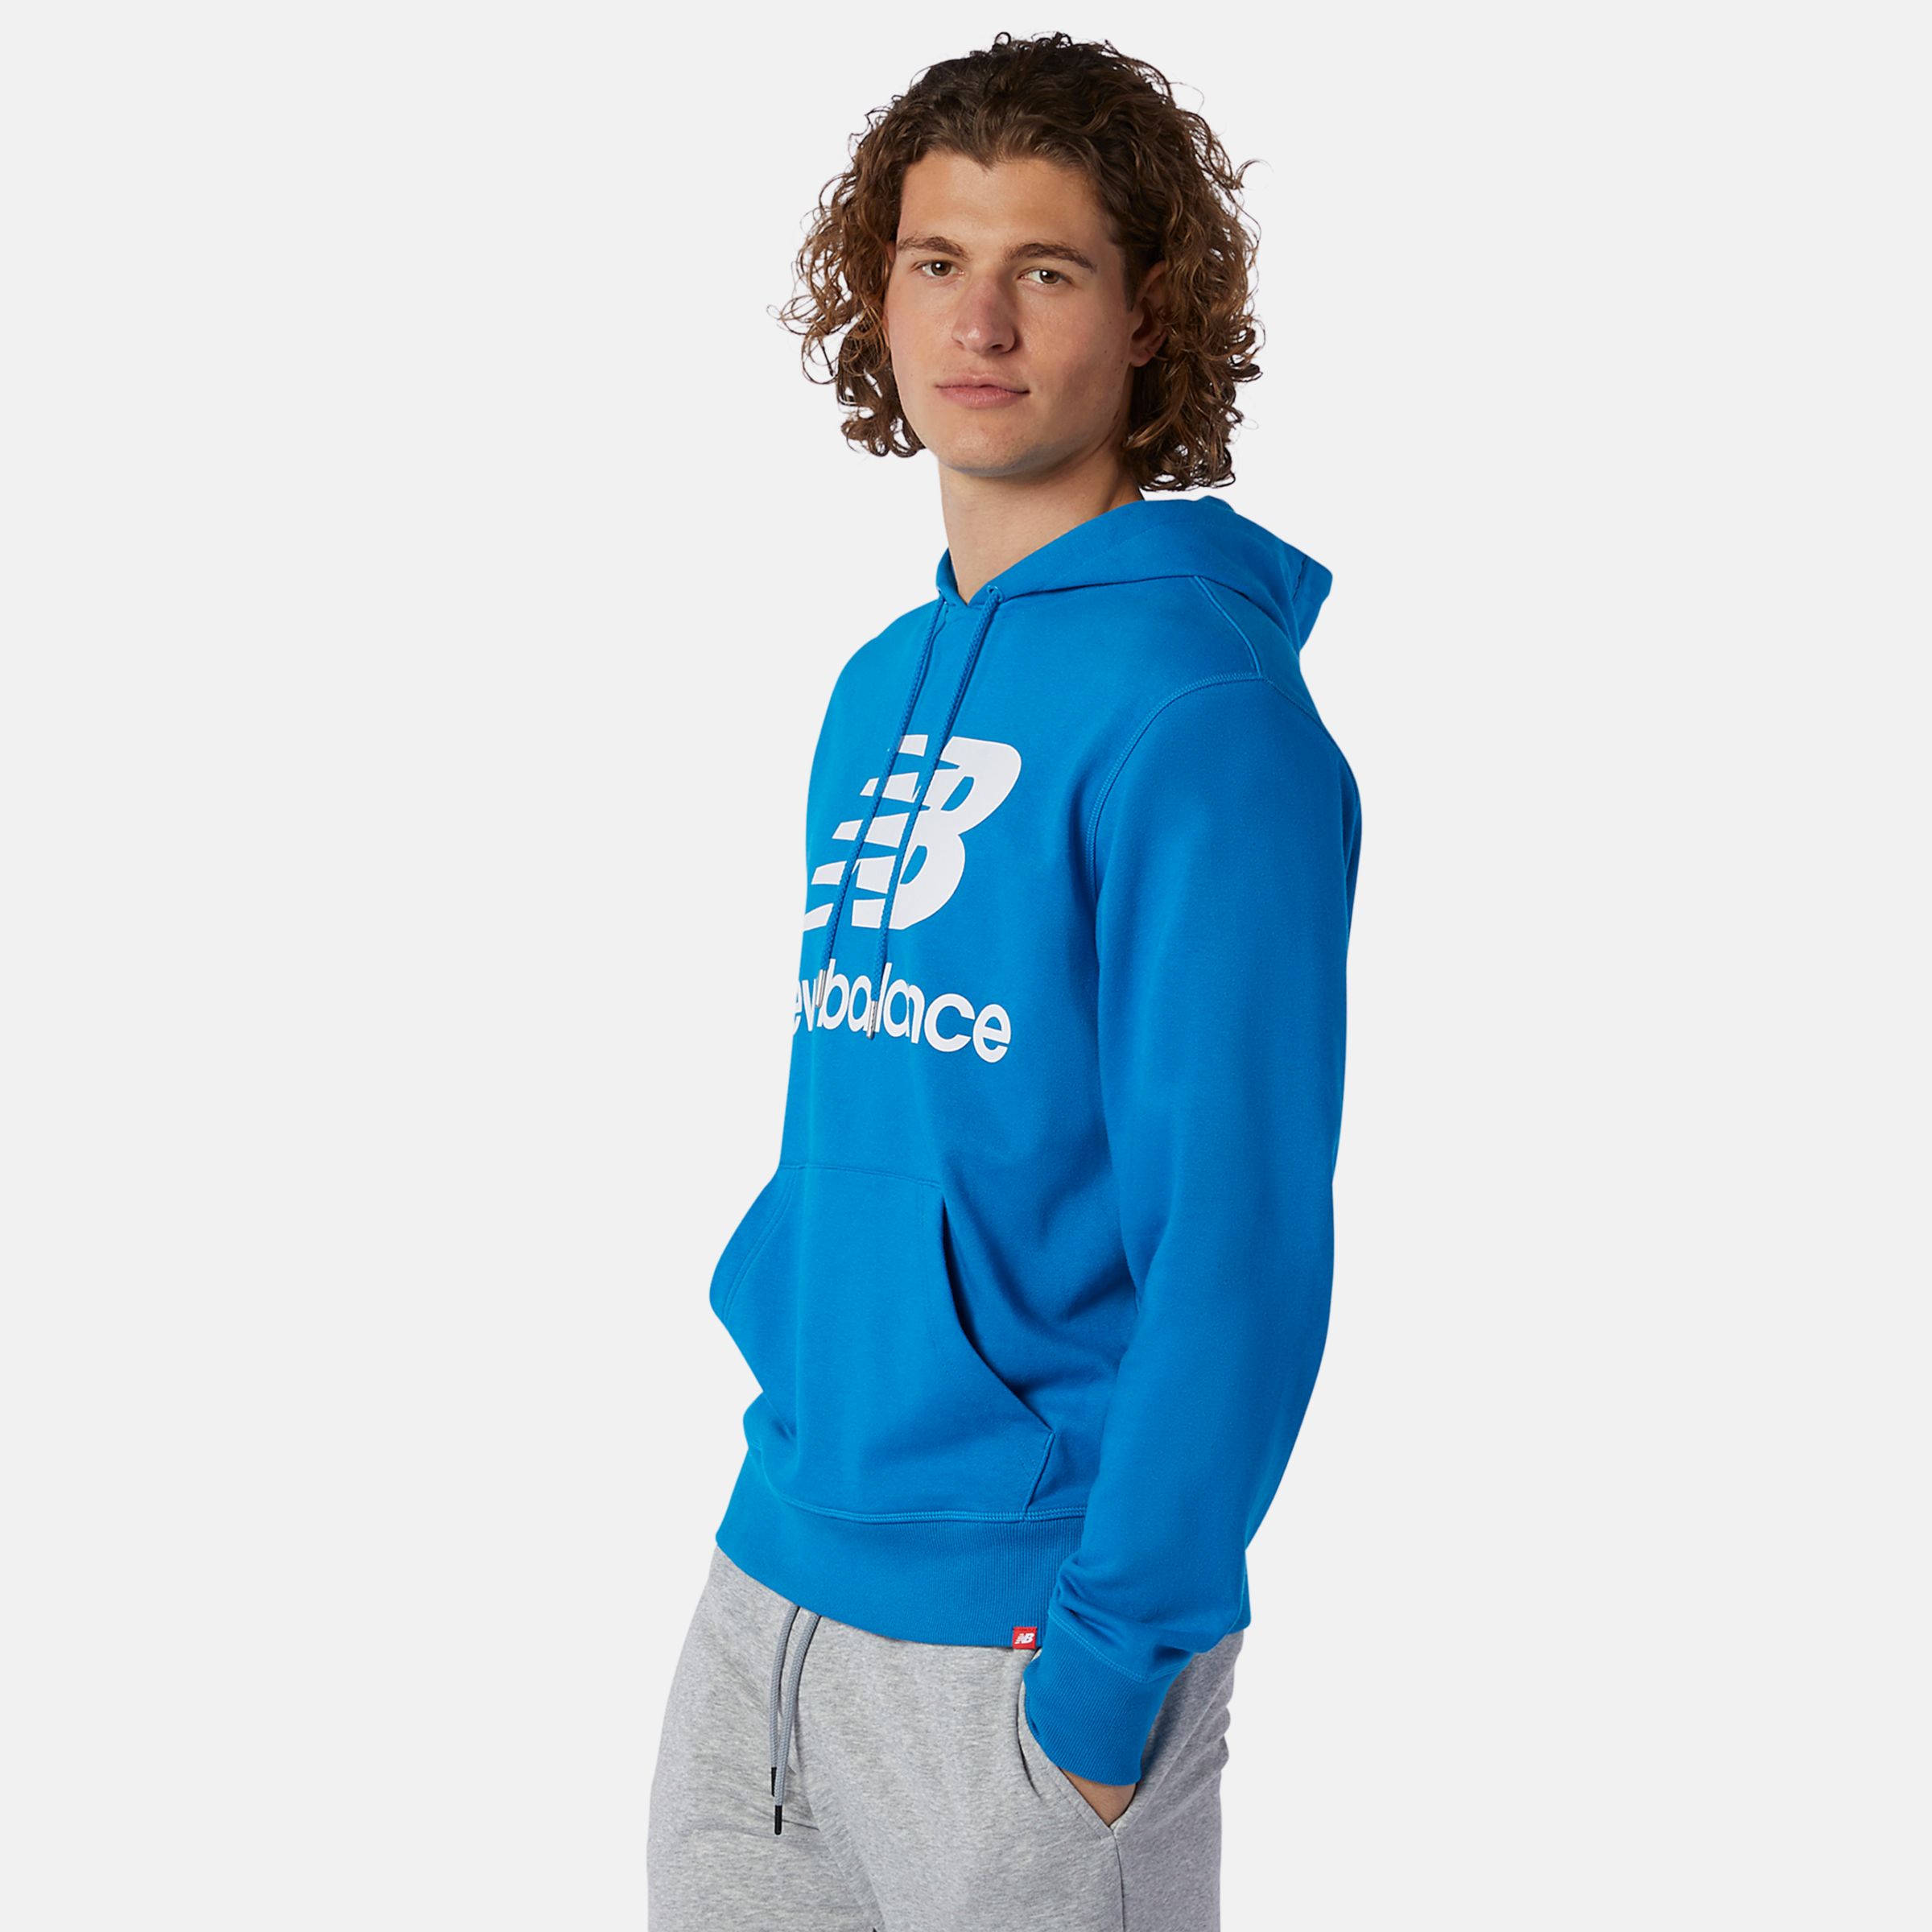 new balance logo hoodie